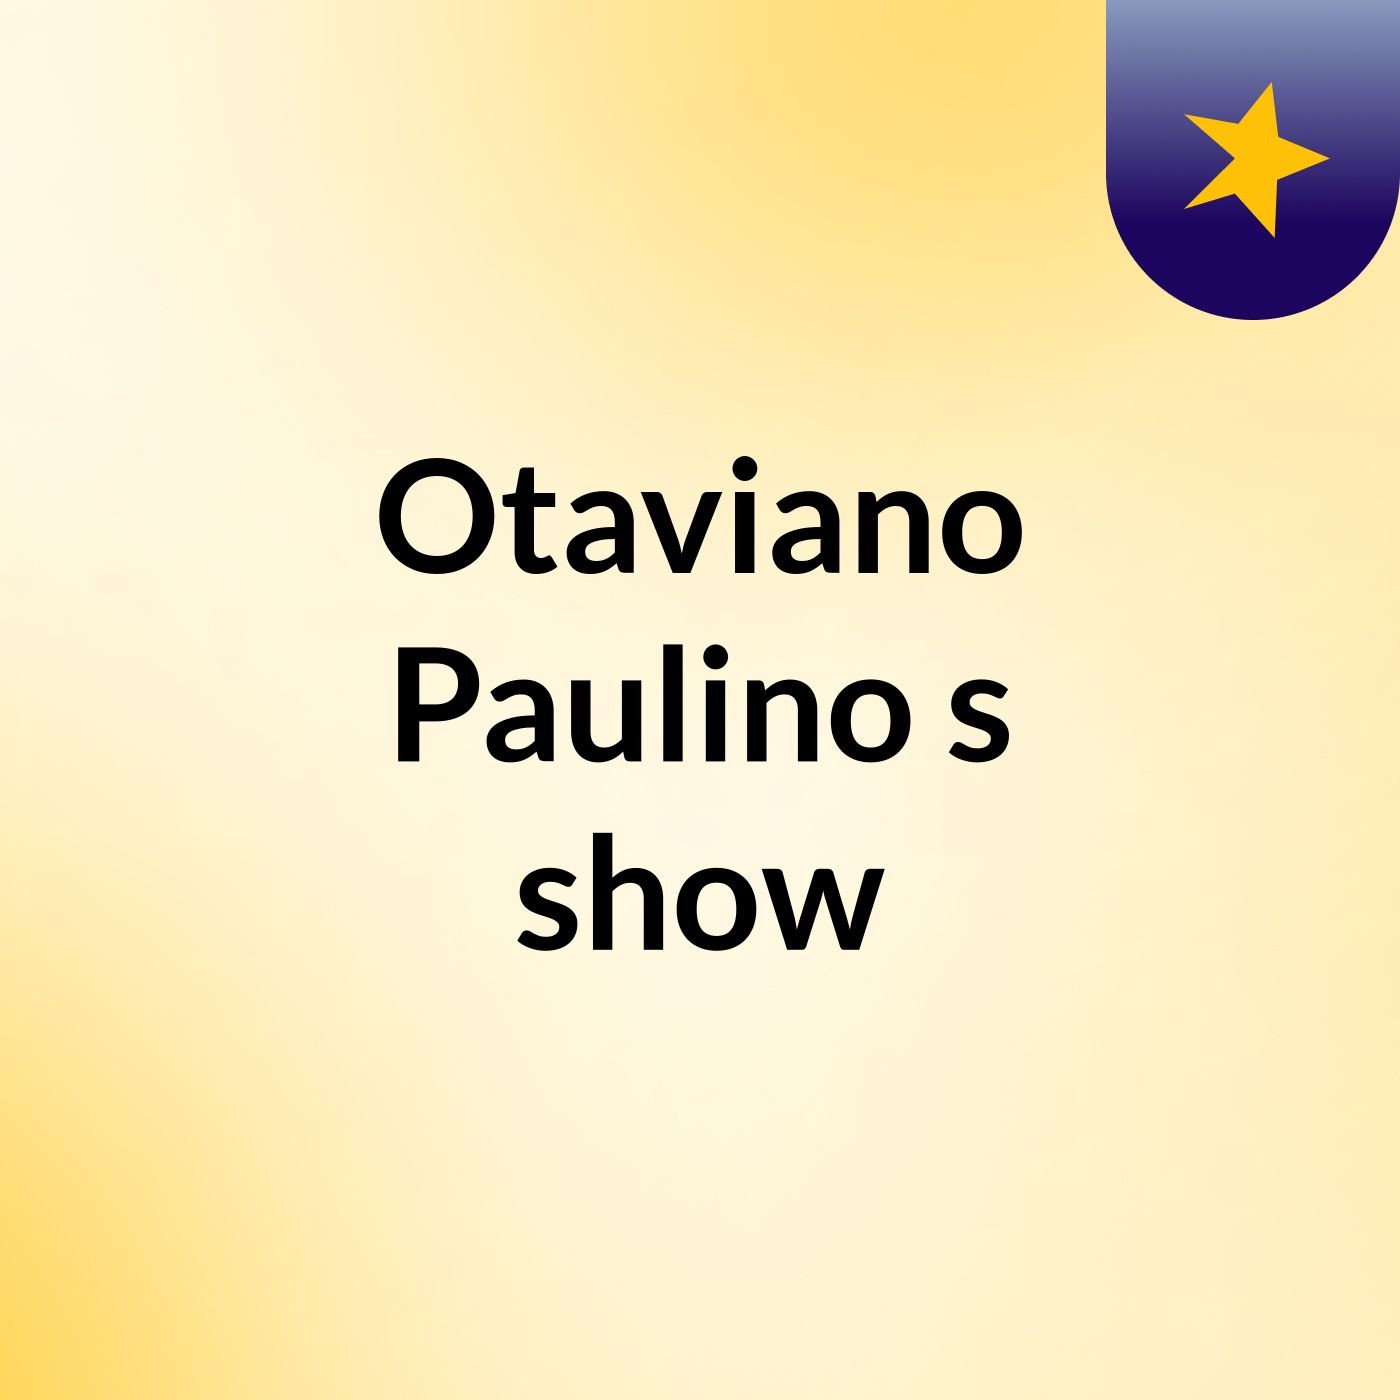 Episódio 68 - Otaviano Paulino's show